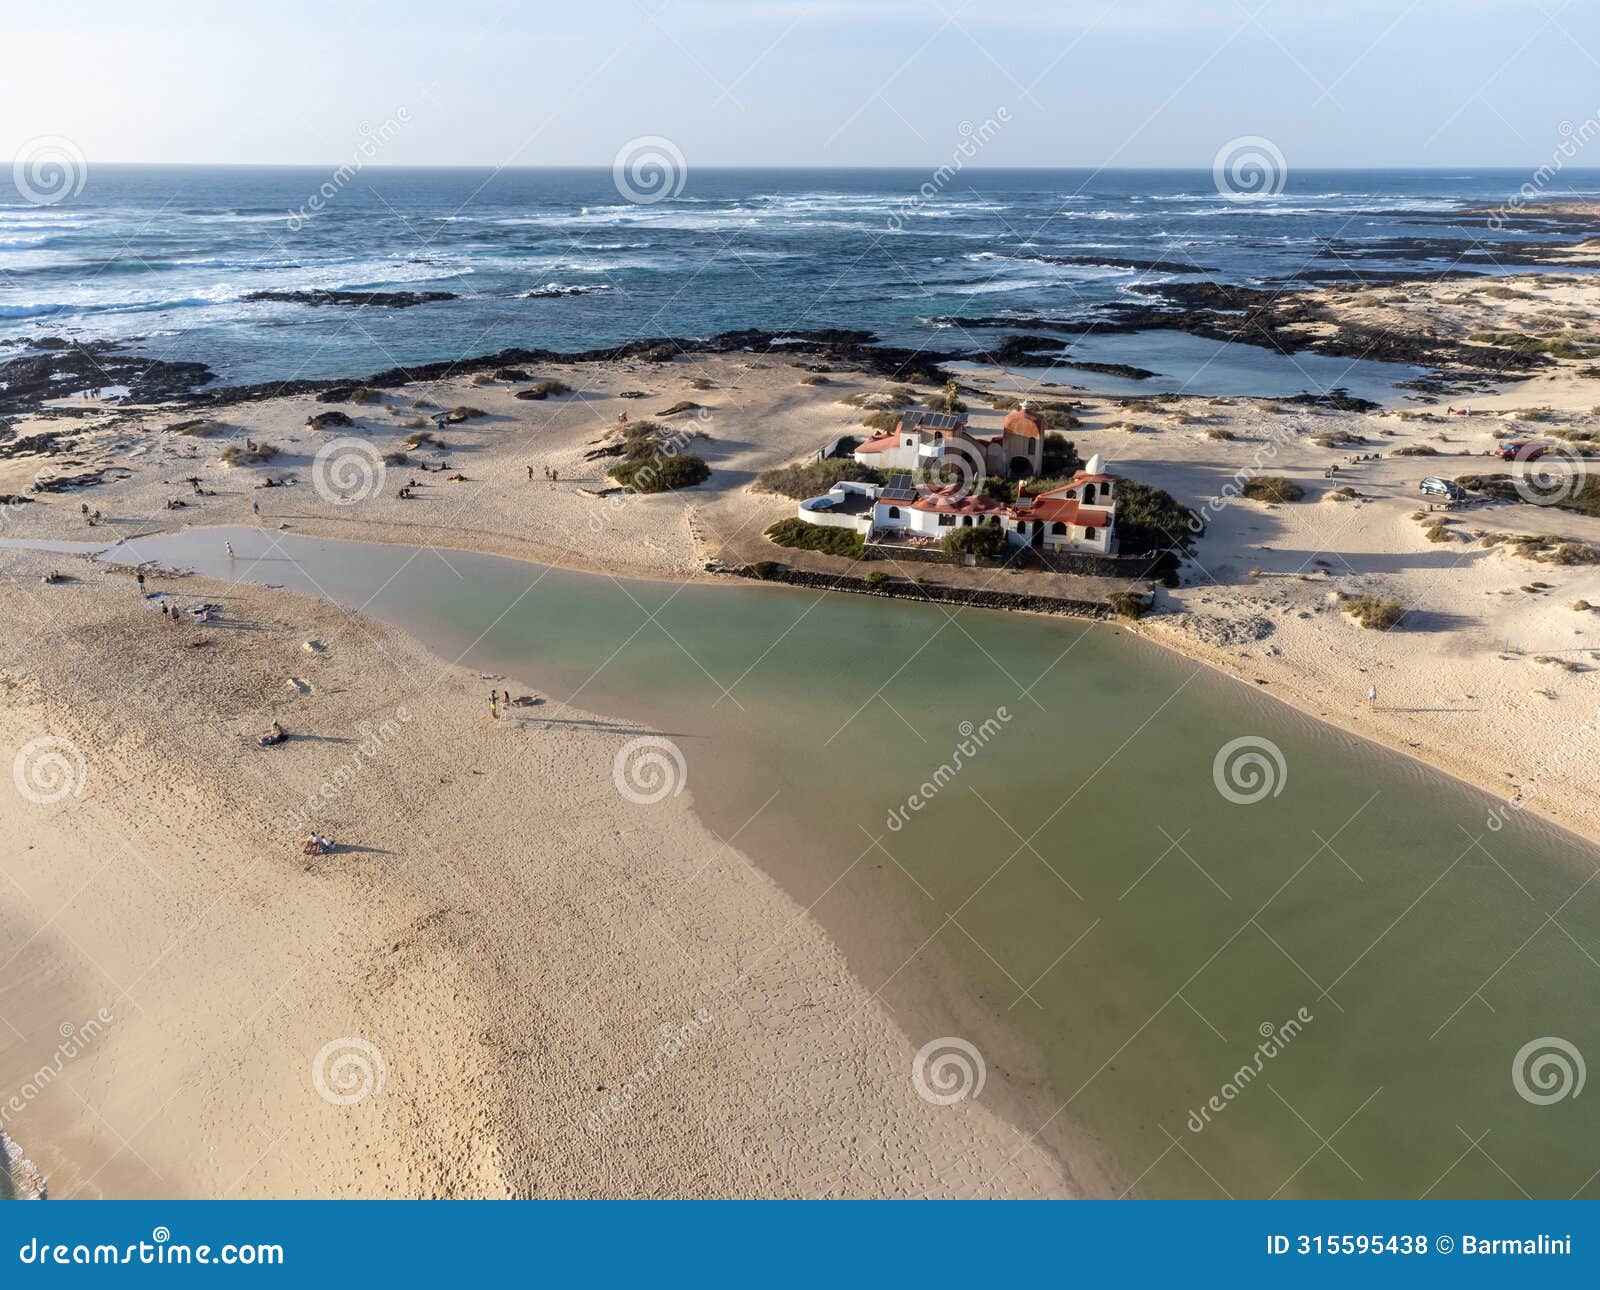 caleta del bajo, corralejo grandes playas white sandy beach with blue water near corralejo touristic town on north of